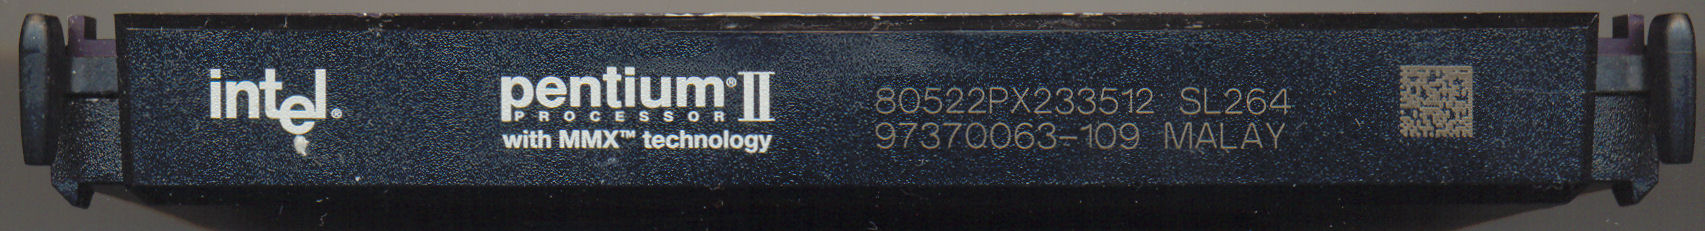 Intel PII 80522PX233512 SL264